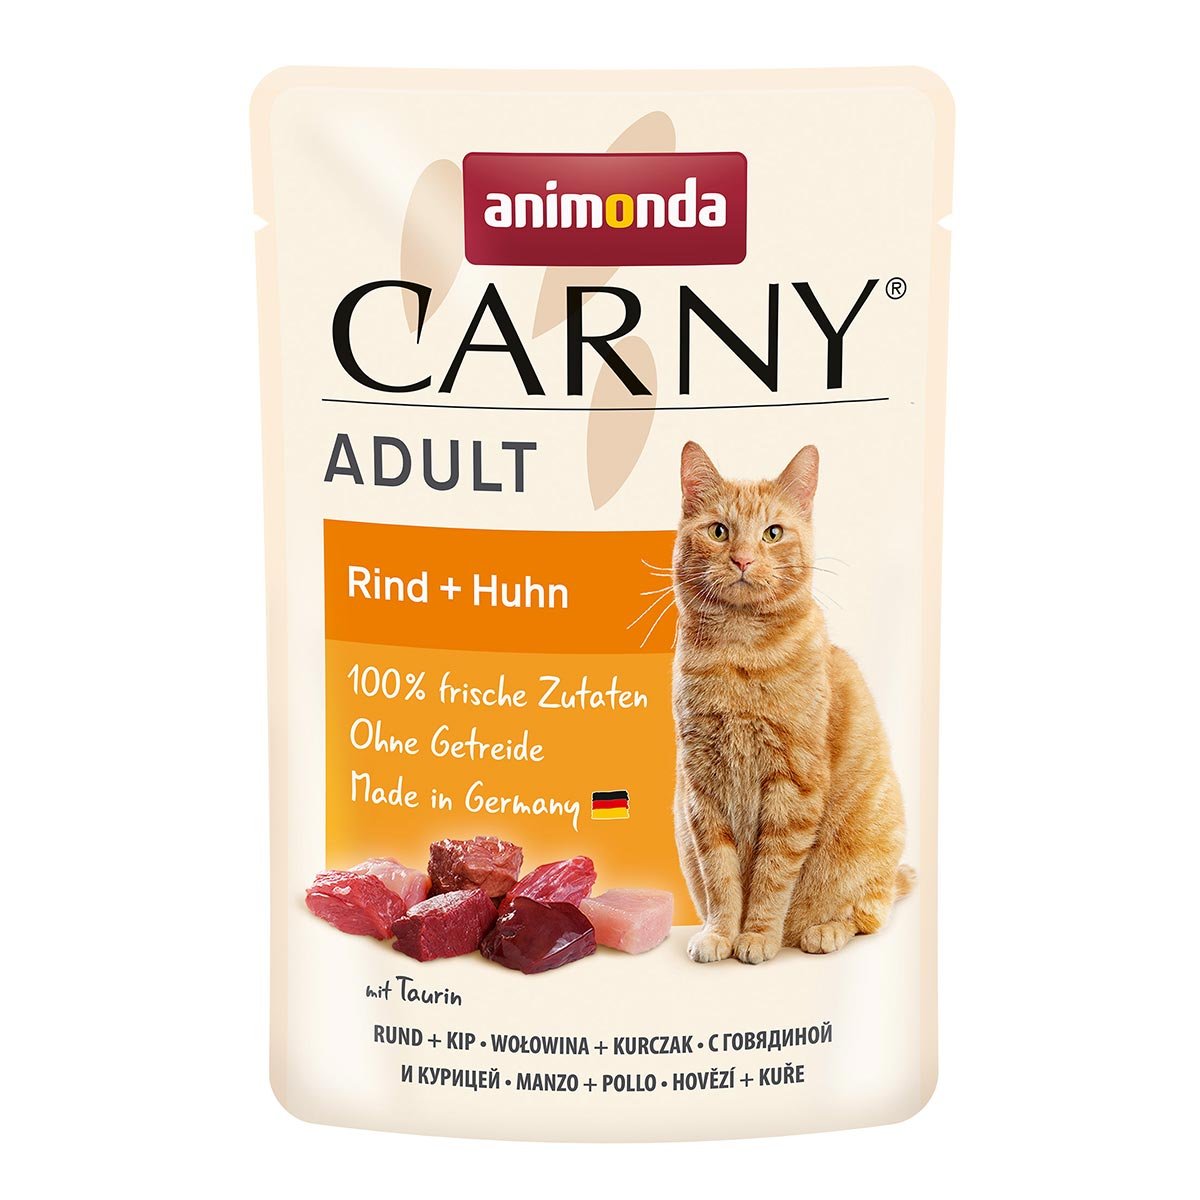 animonda Carny Adult Rind + Huhn 12x85g